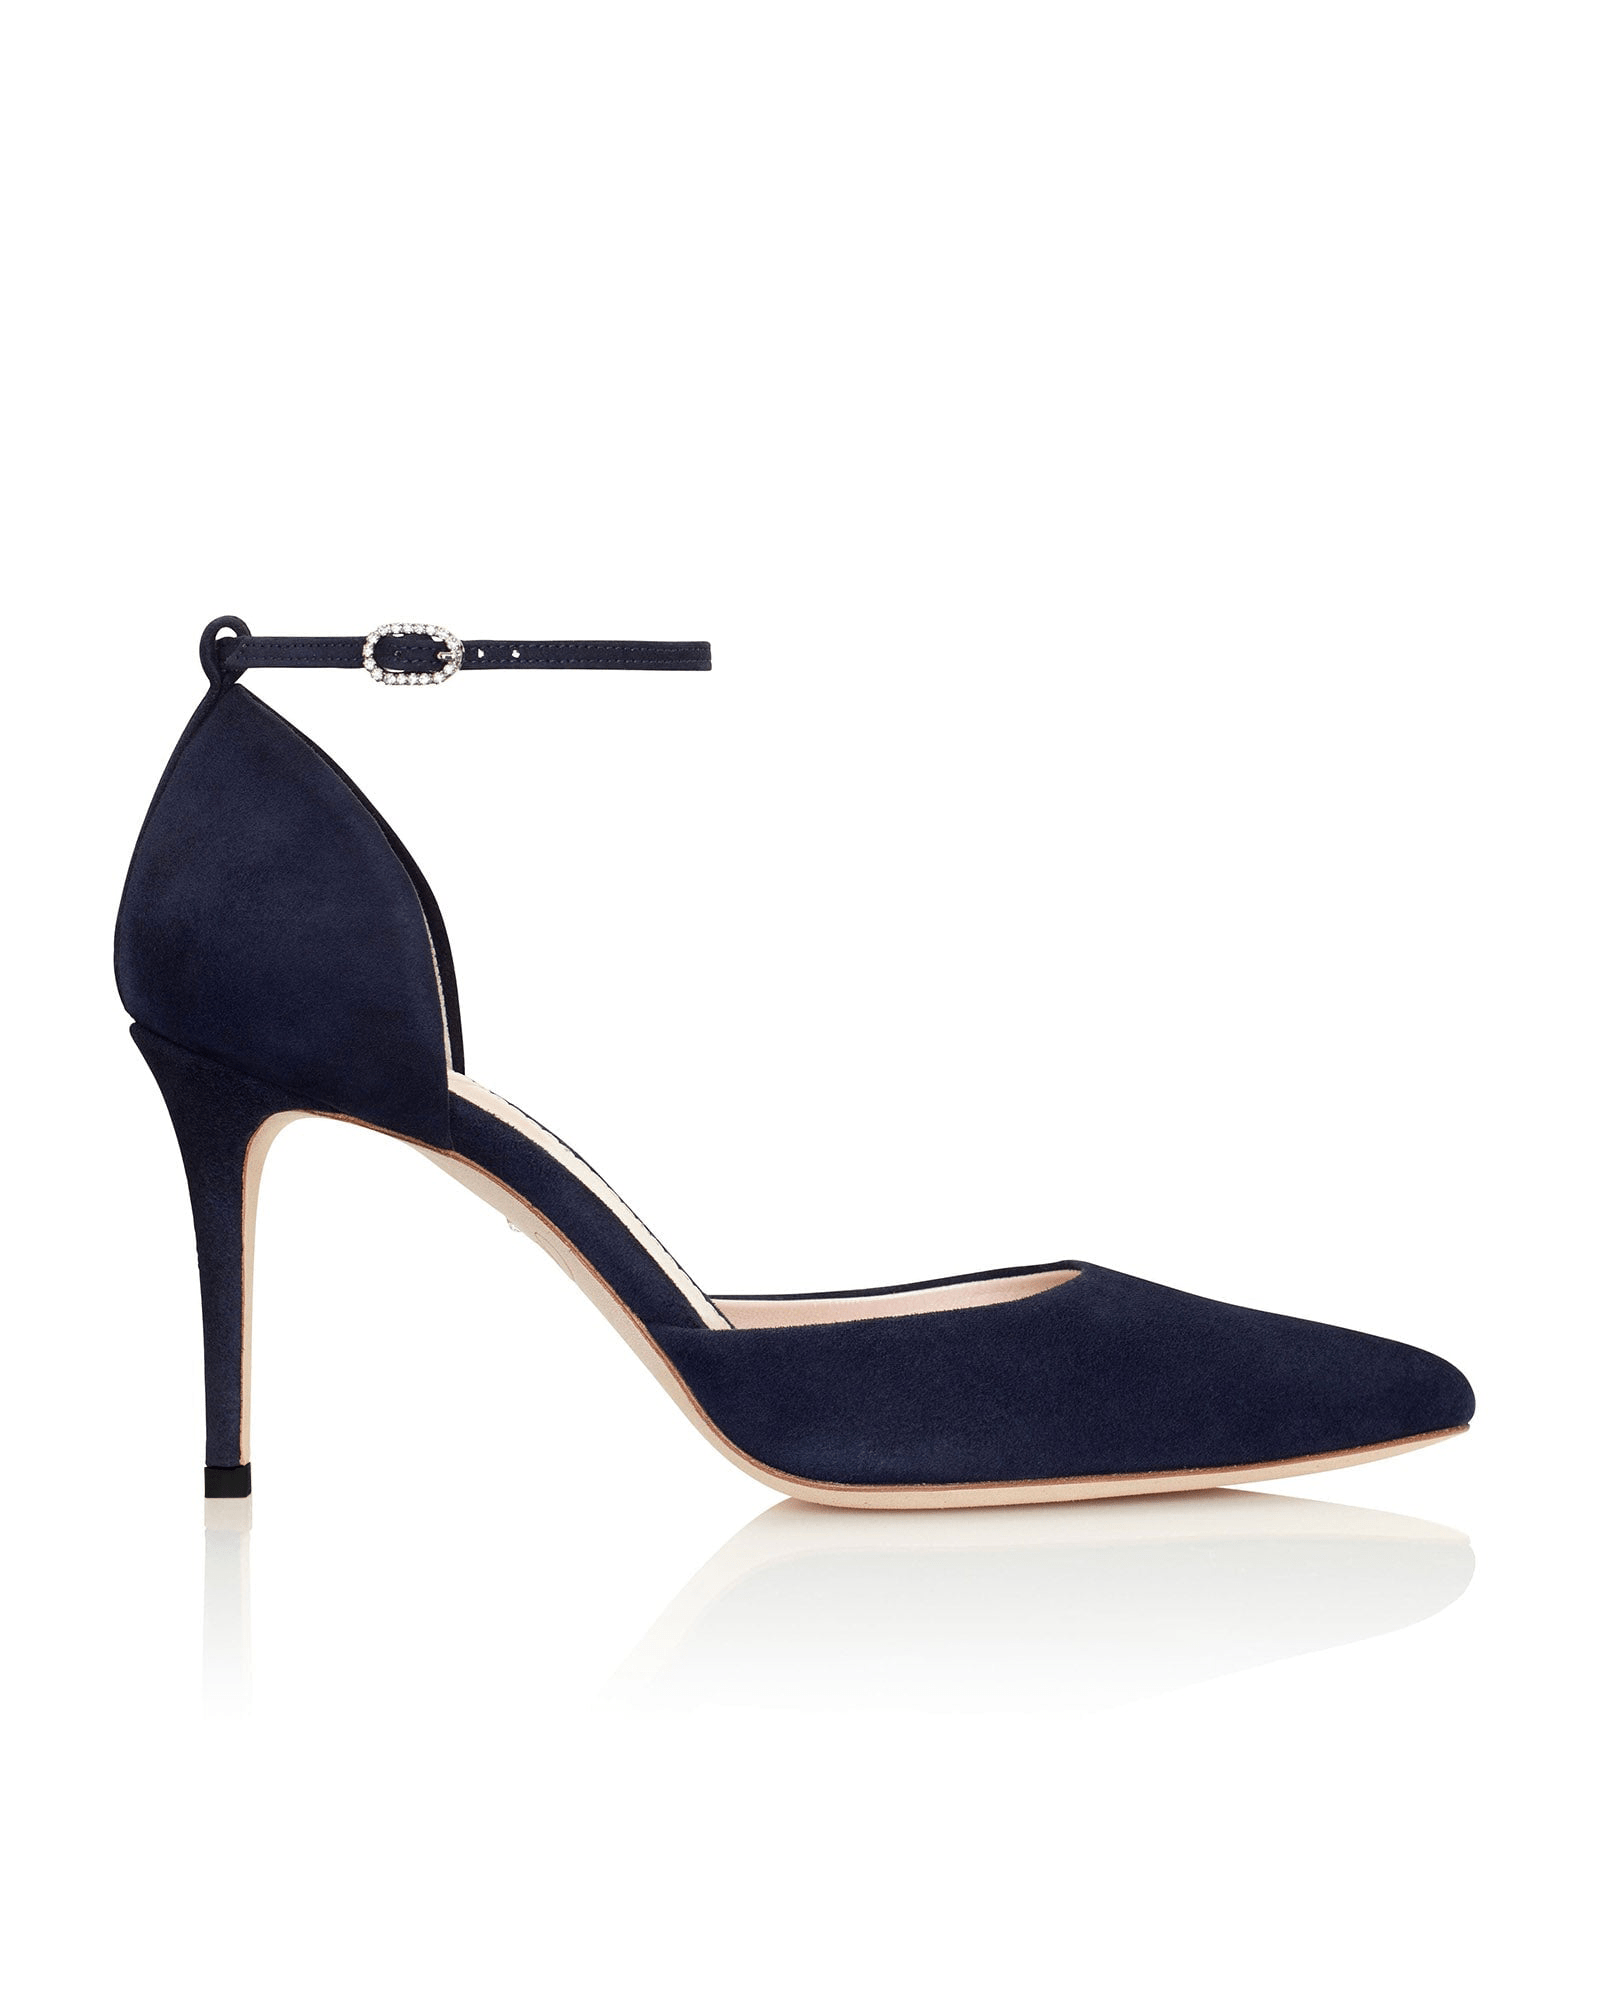 Harriet Mid Heel Fashion Shoe Navy Blue Suede Court Shoes  image